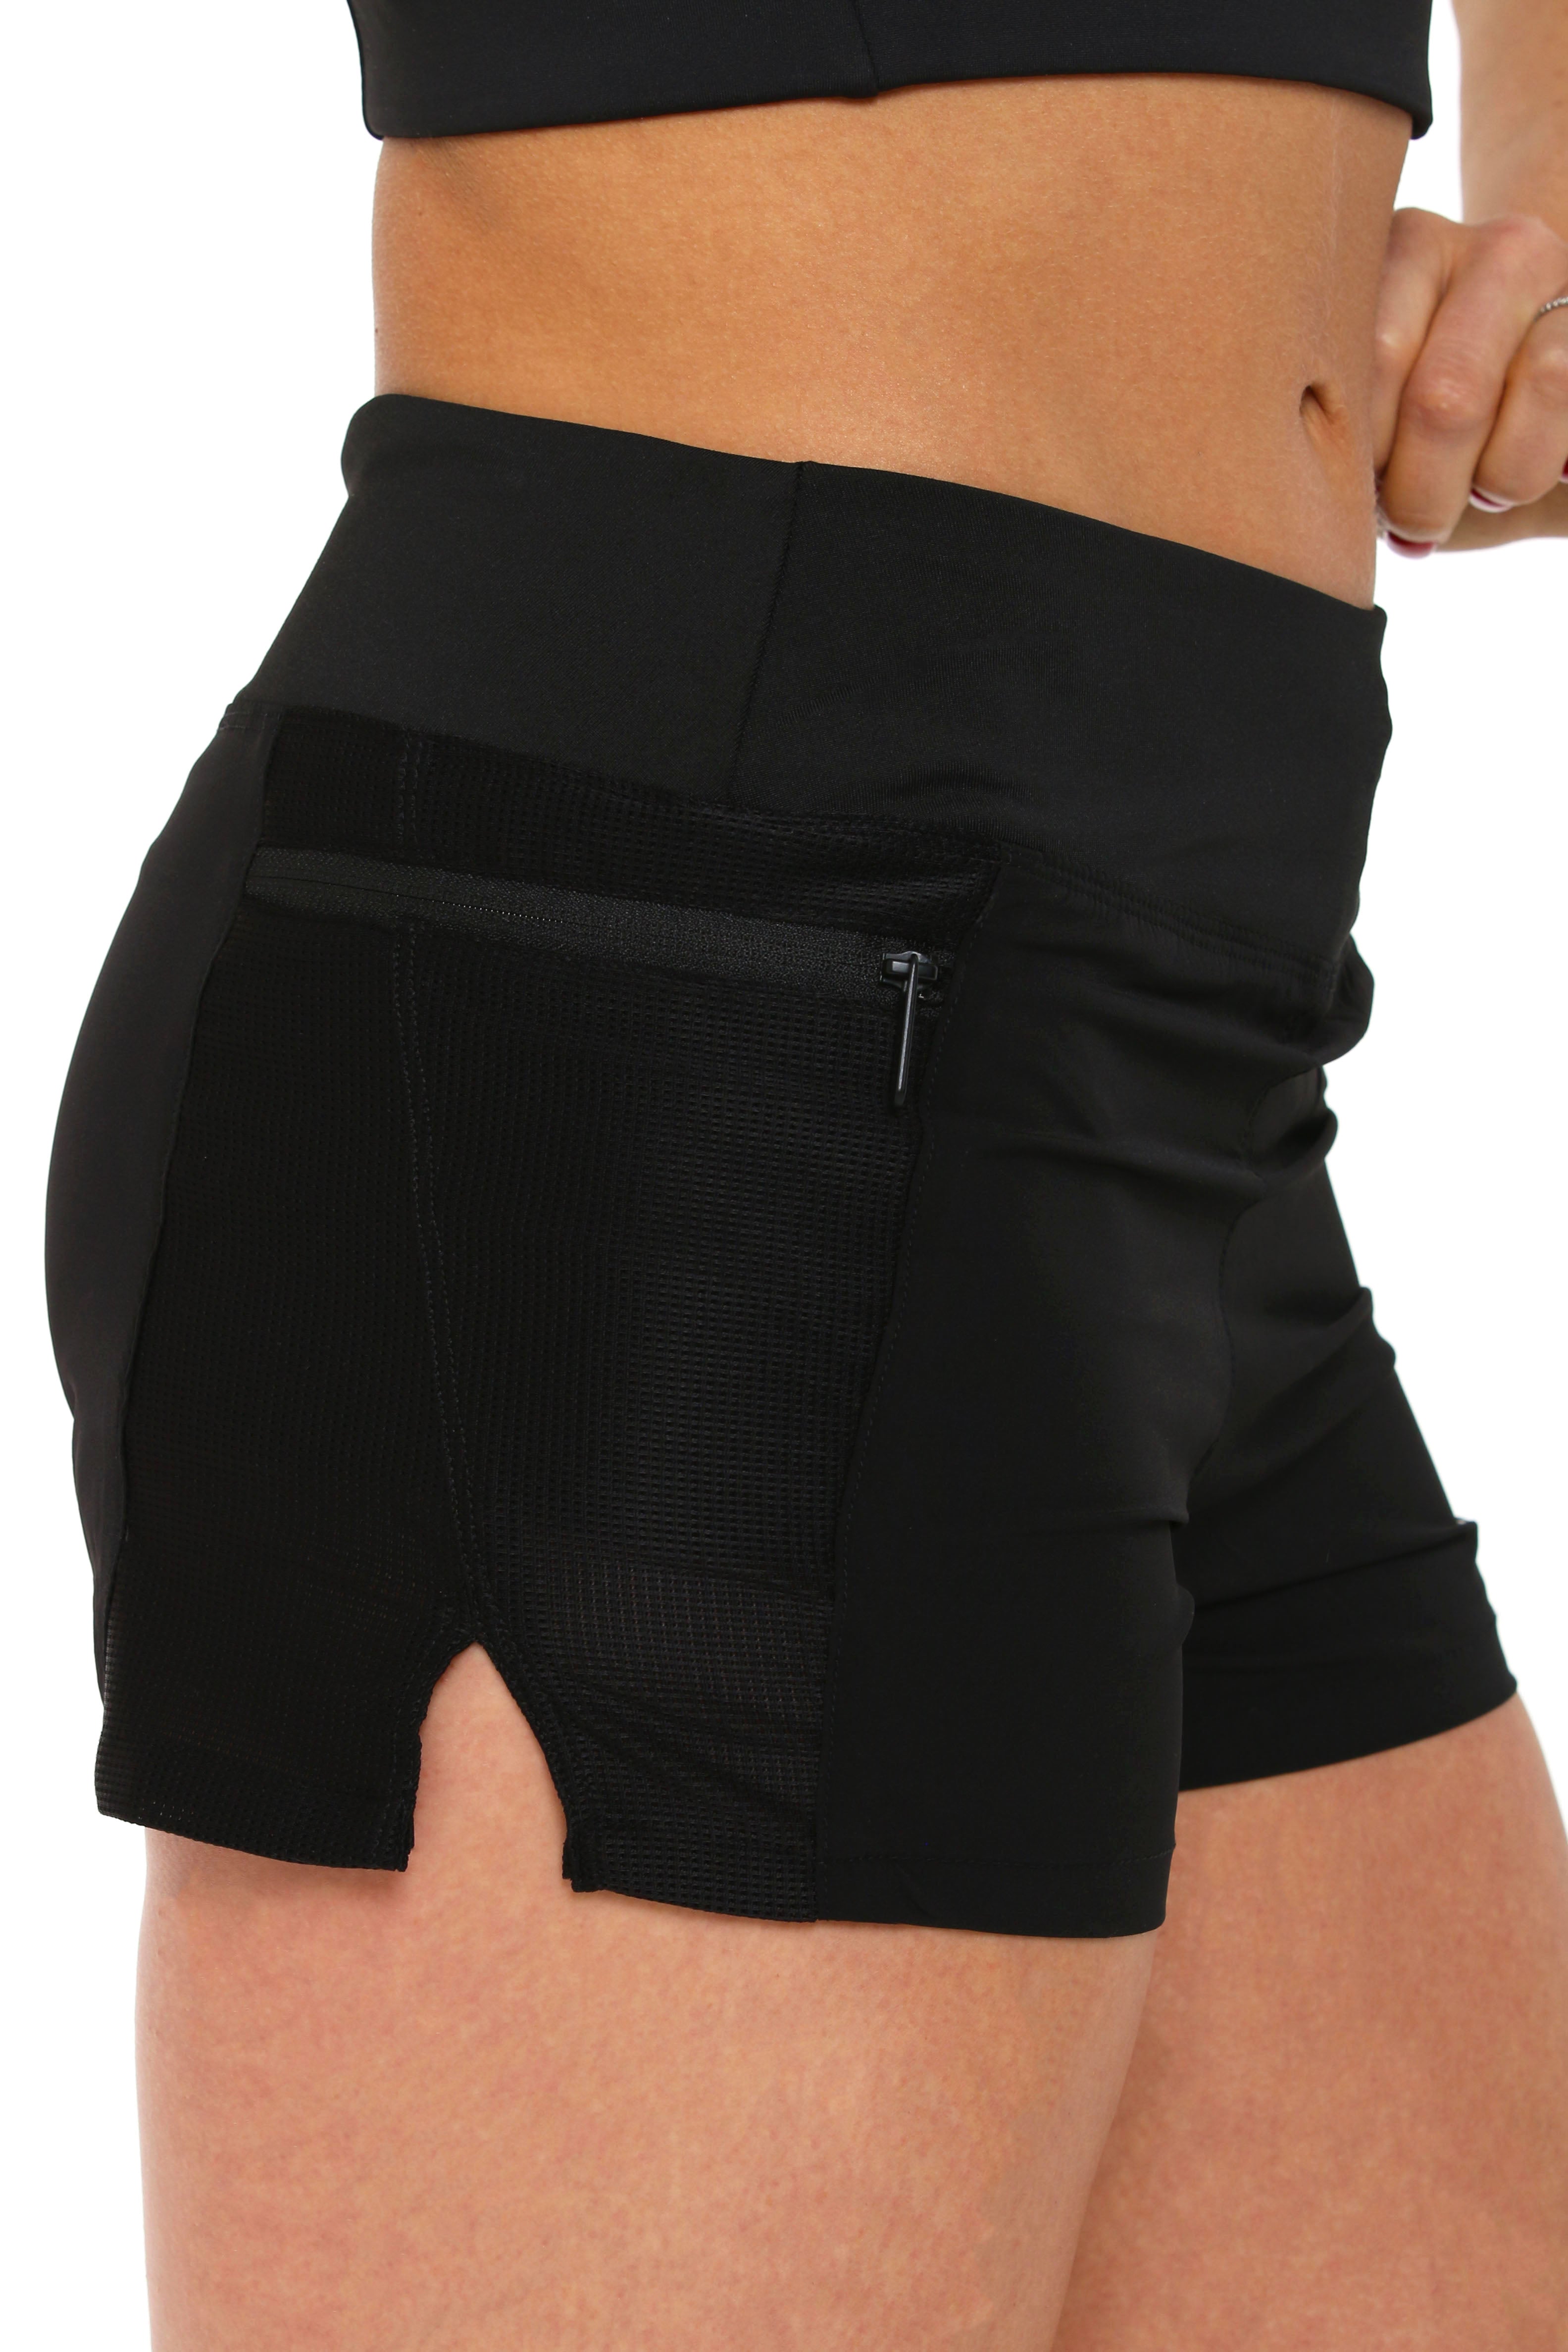 Humble Apparel Women's Gym Shorts Flow Shorts - Black